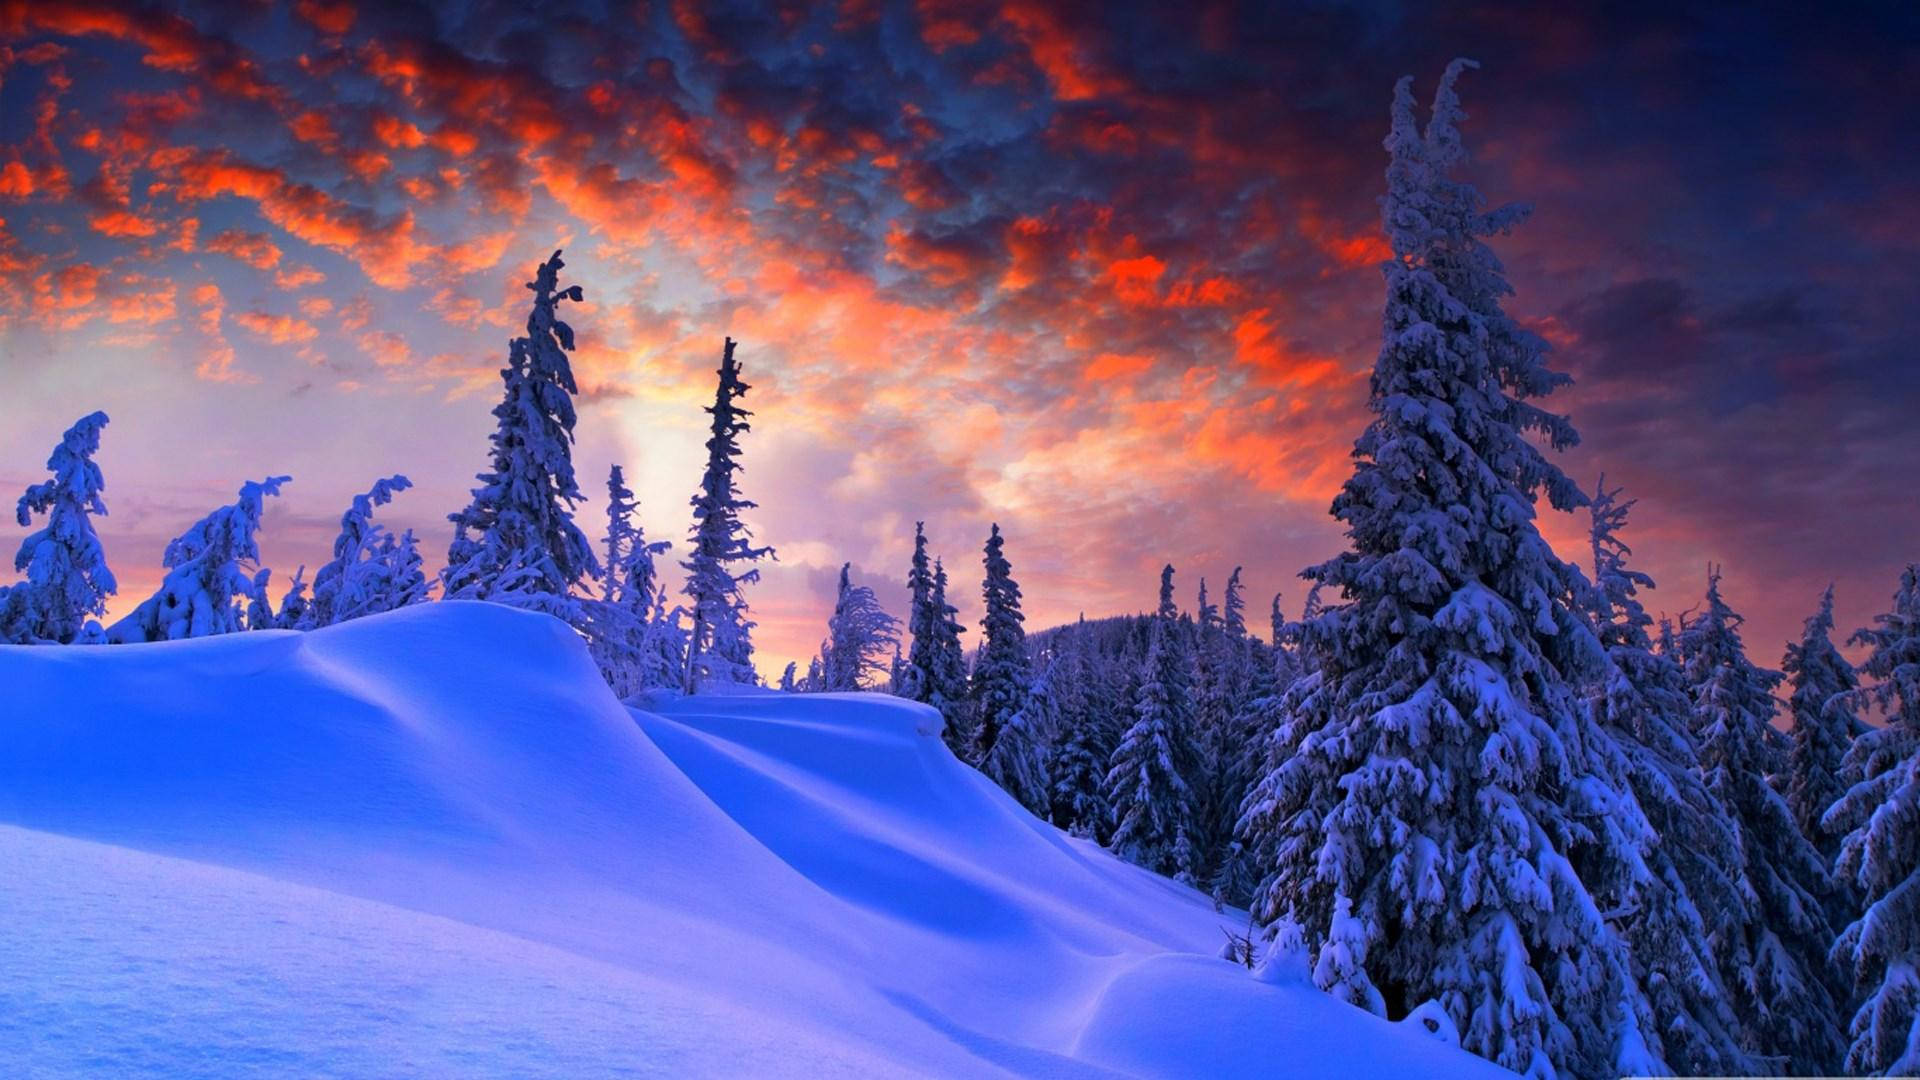 Windows Winter And Orange Sky Background